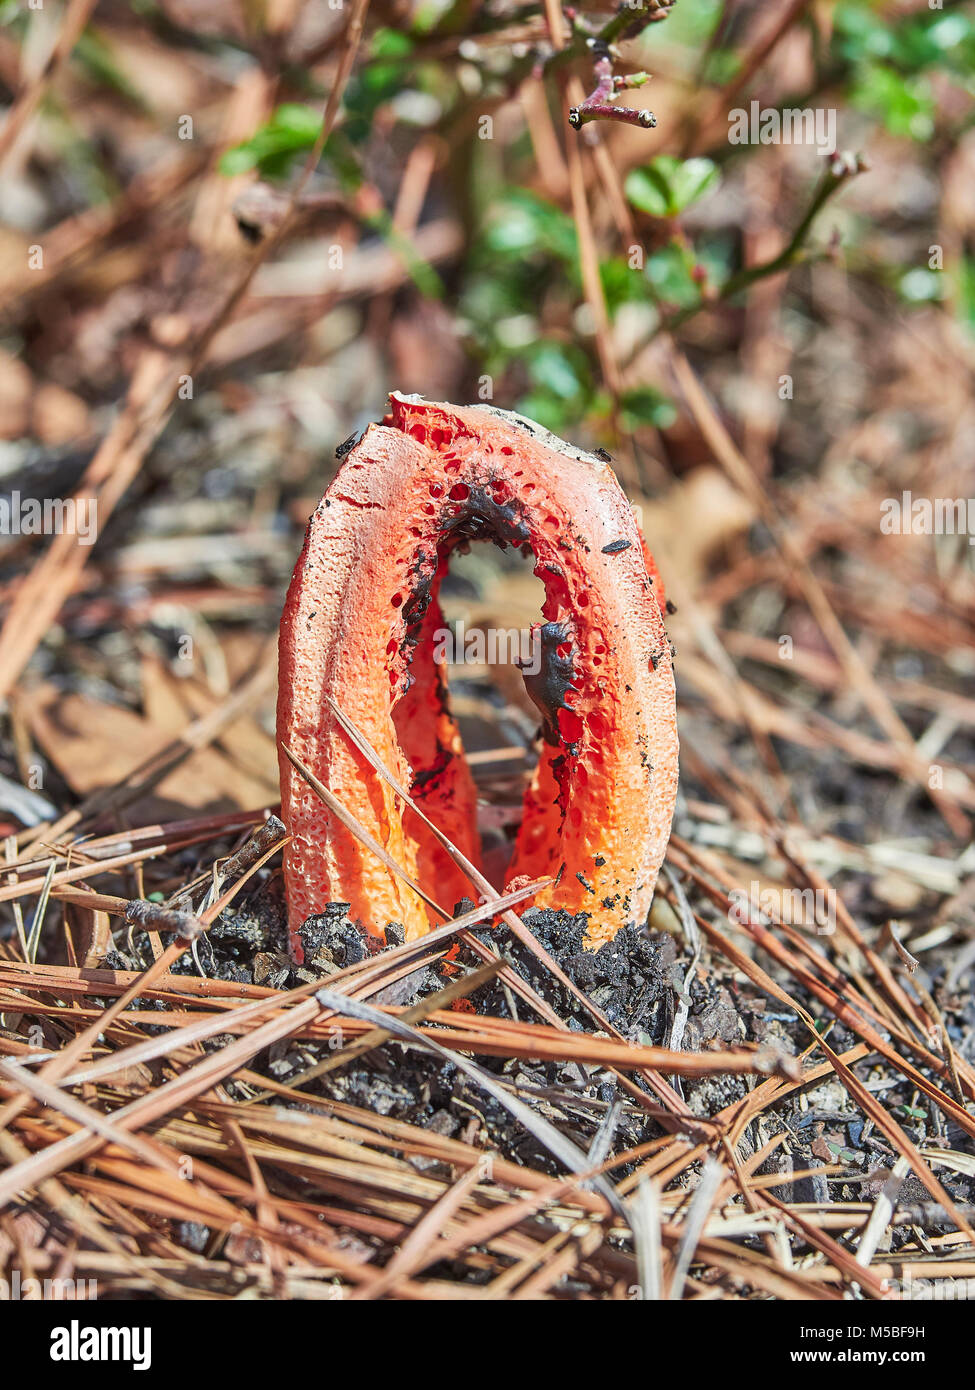 Clathrus Ruber, jaula o cesta stinkhorn stinkhorn, hongos creciendo en el piso del bosque, Montgomery, Alabama, Estados Unidos. Foto de stock